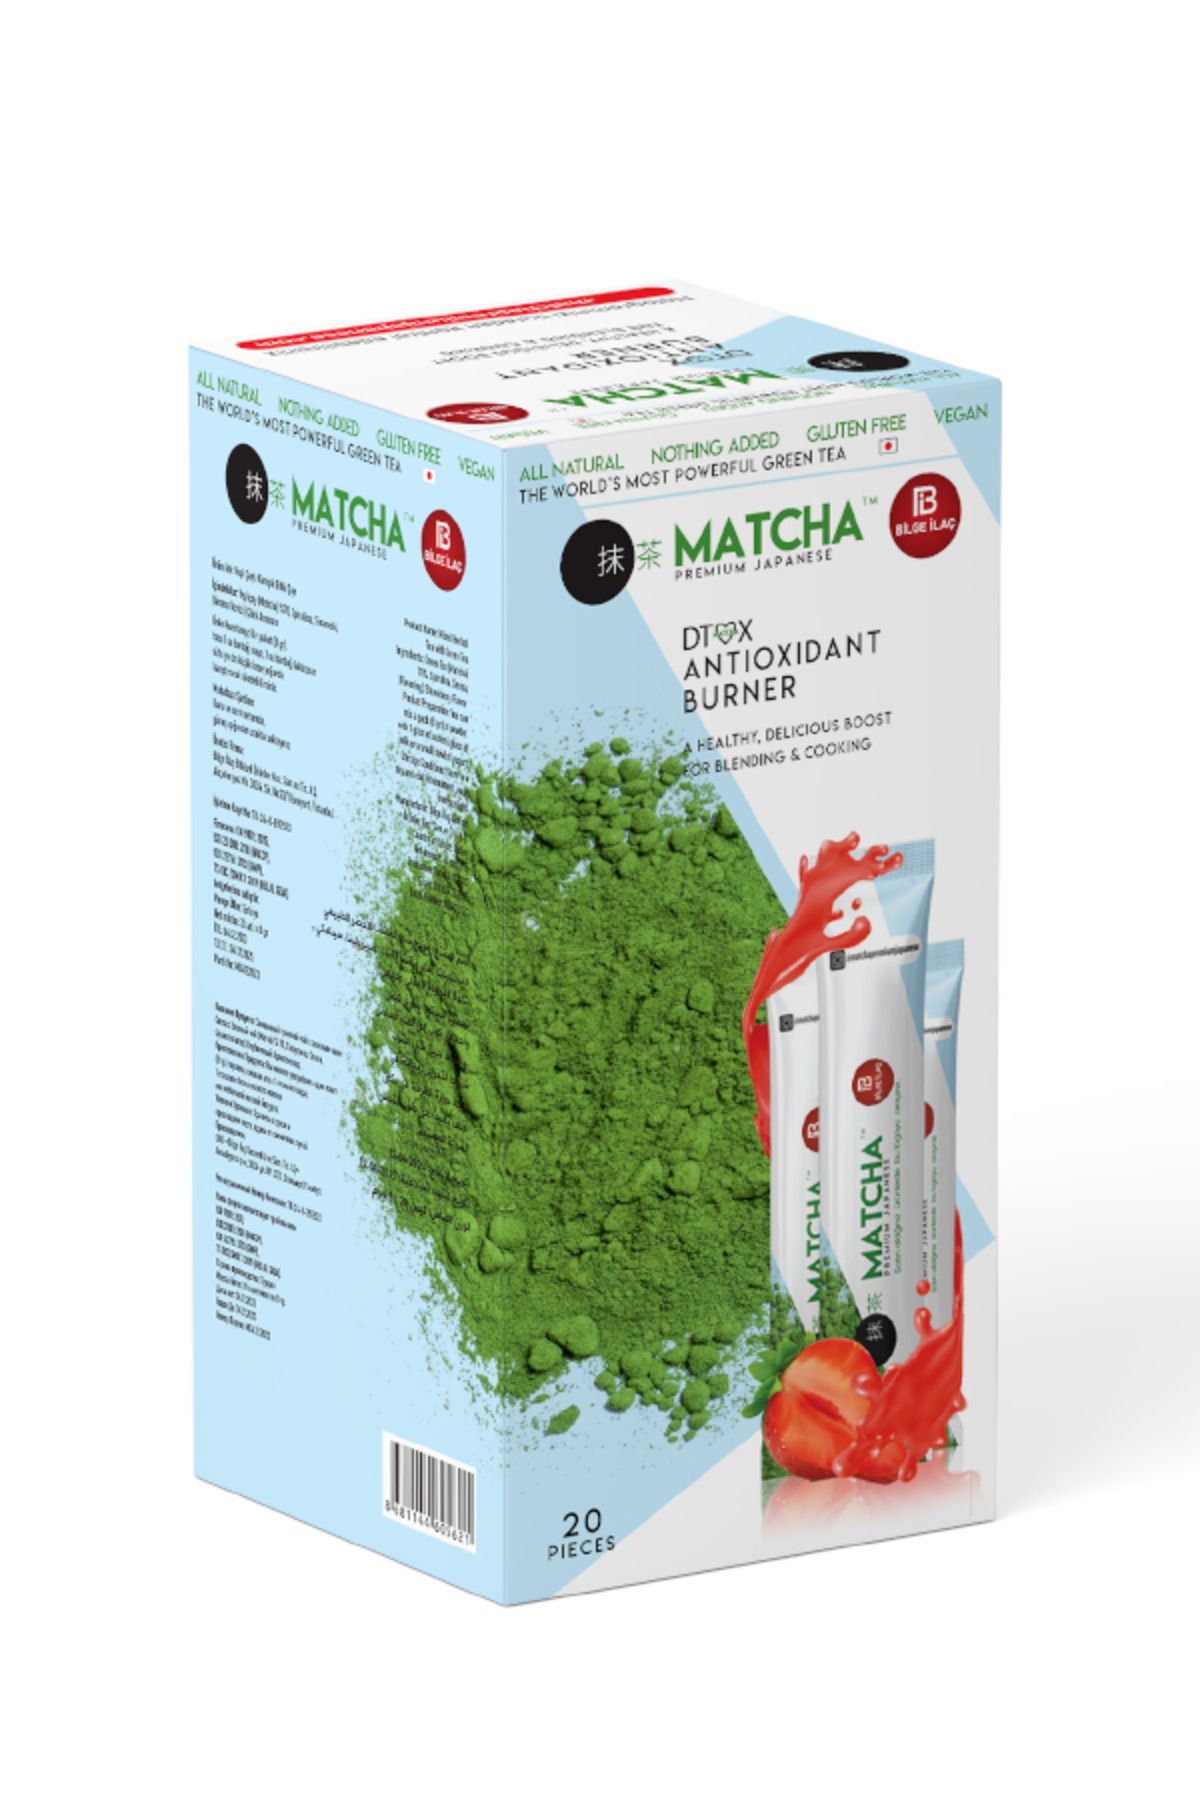 Matcha Premium Japanese Çilek Aromalı Detox Burner Form Matcha Çayı 1 Kutu